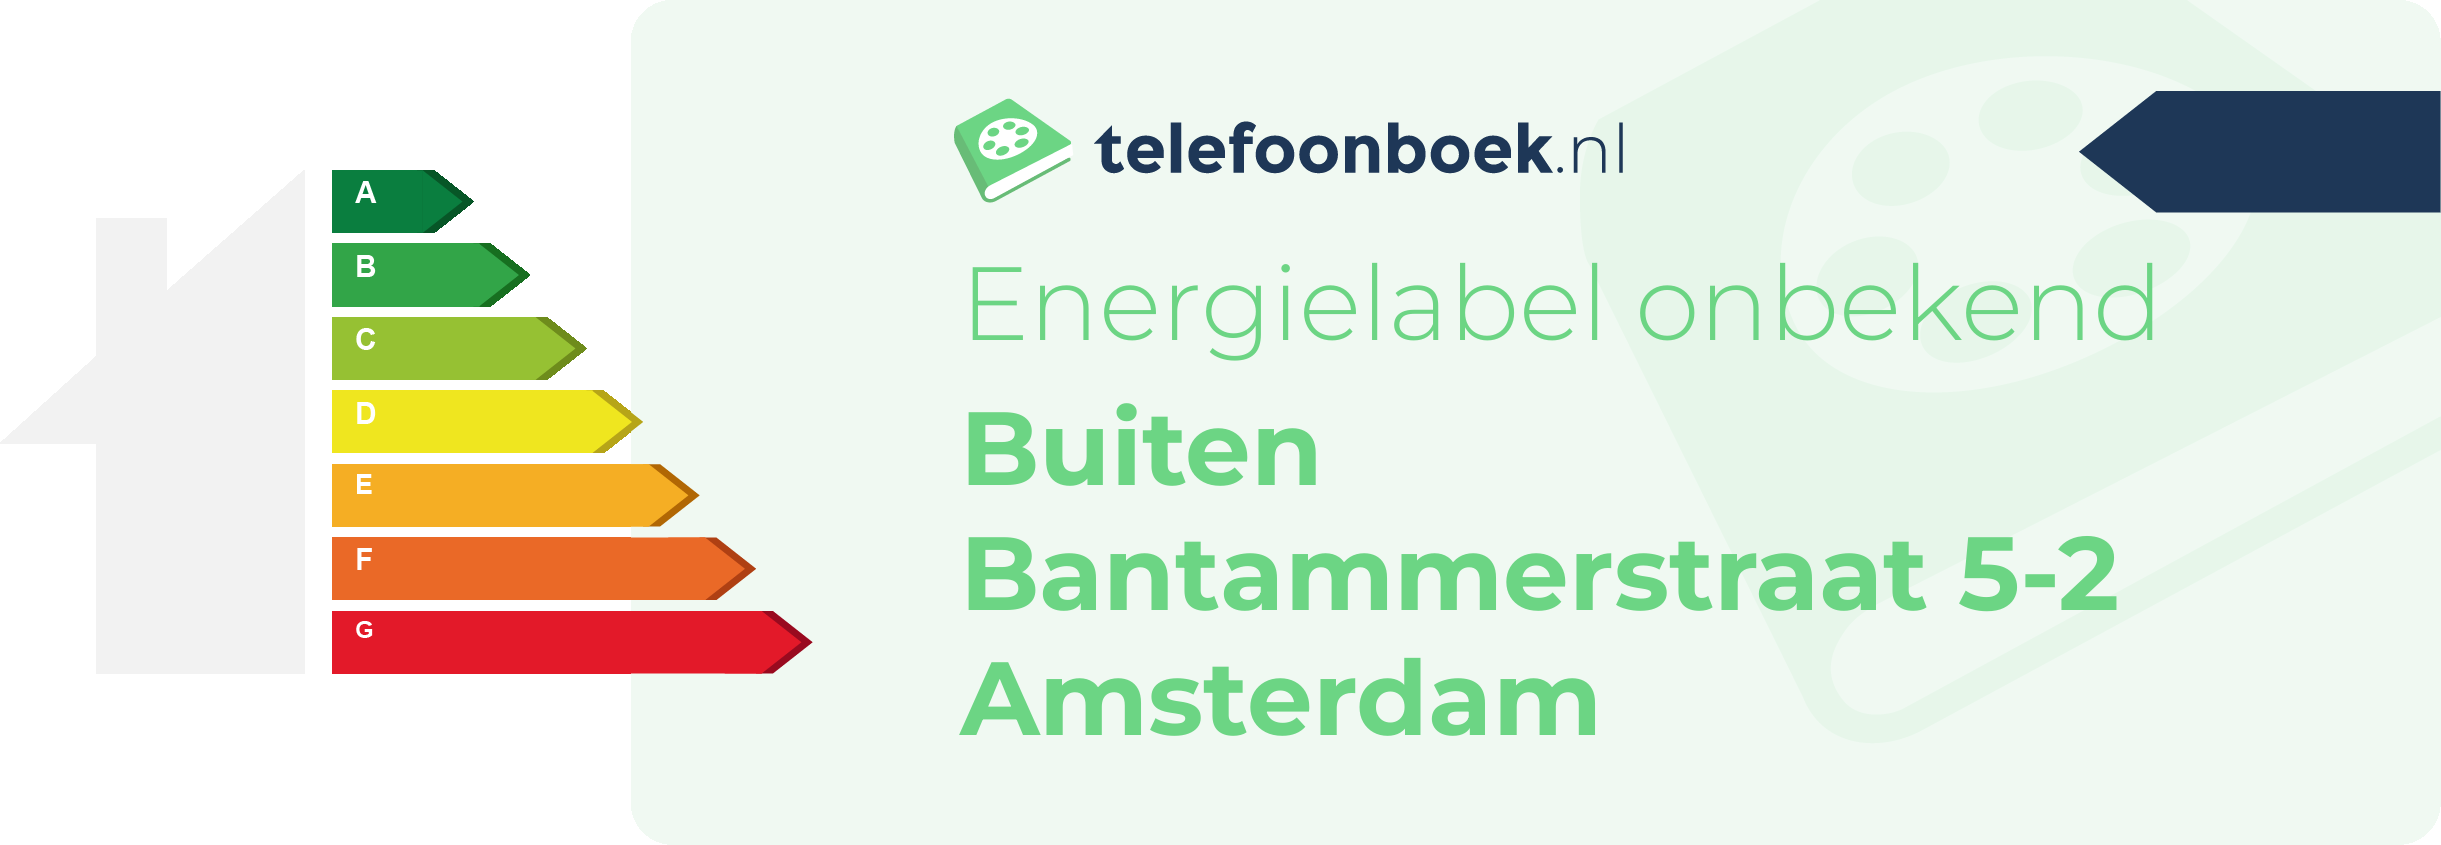 Energielabel Buiten Bantammerstraat 5-2 Amsterdam